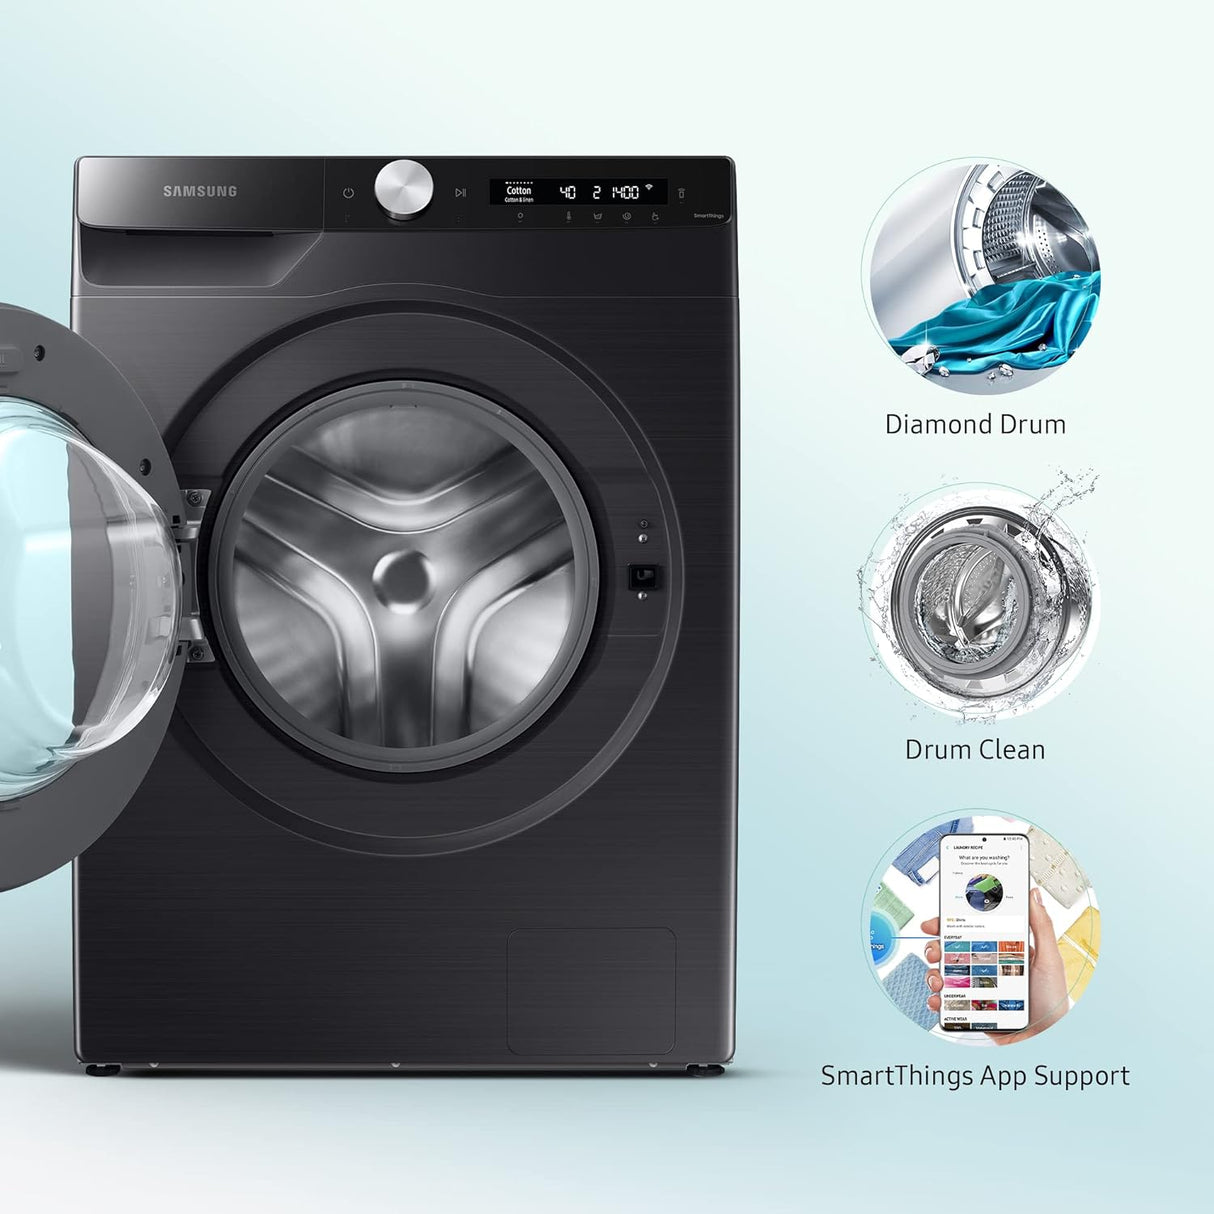 Samsung 12 kg, 5 star, Eco Bubble Technology, AI Control , Wi-Fi, Digital Inverter Motor, Fully-Automatic Front Load Washing Machine Appliance (WW12T504DAB/TL, Hygiene Steam, Black Caviar)